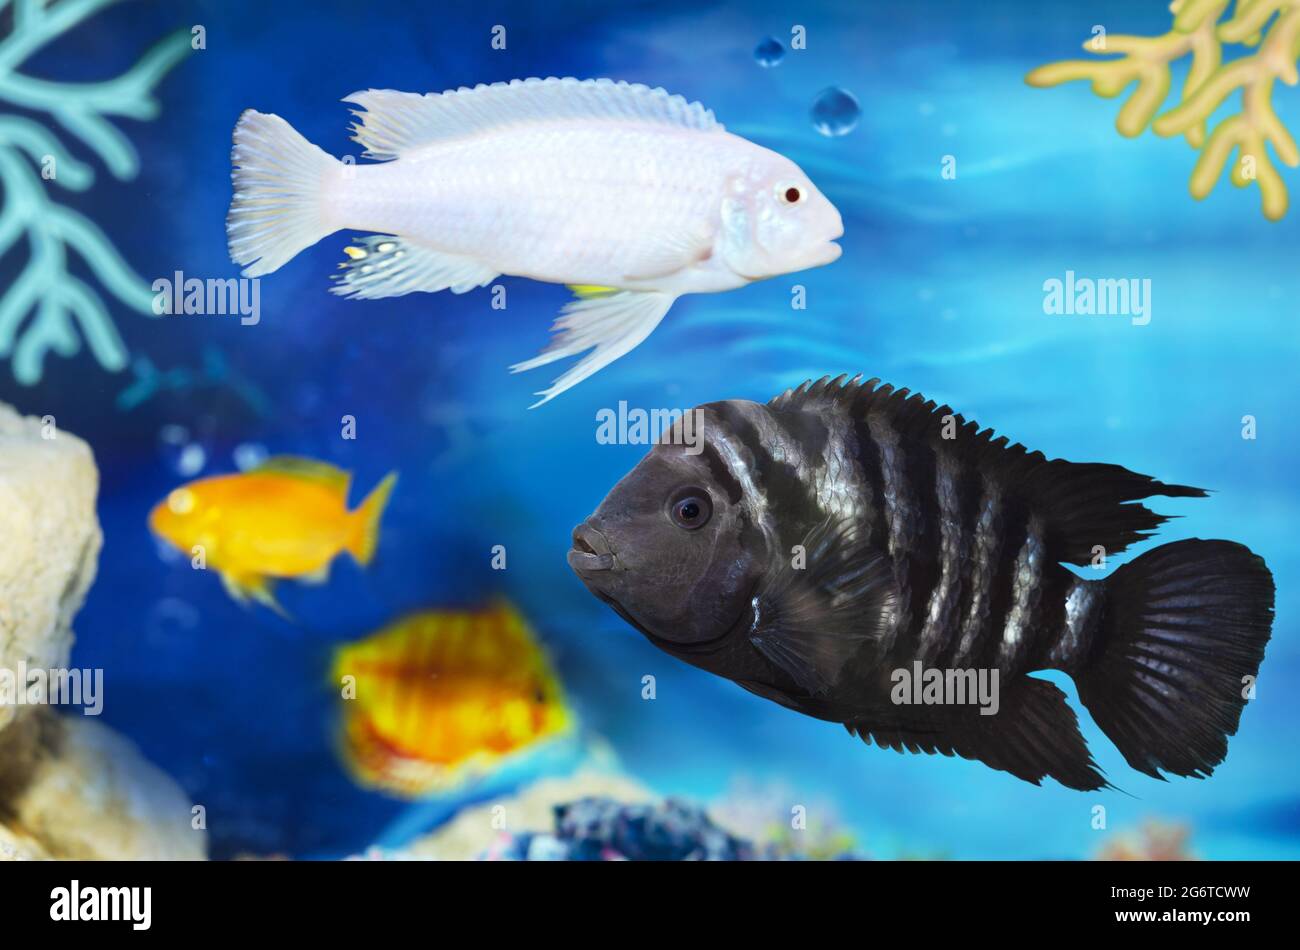 Fish with black stripes Cichlasoma nigrofasciatum, on a defocused background of different fish. Selective focus Stock Photo